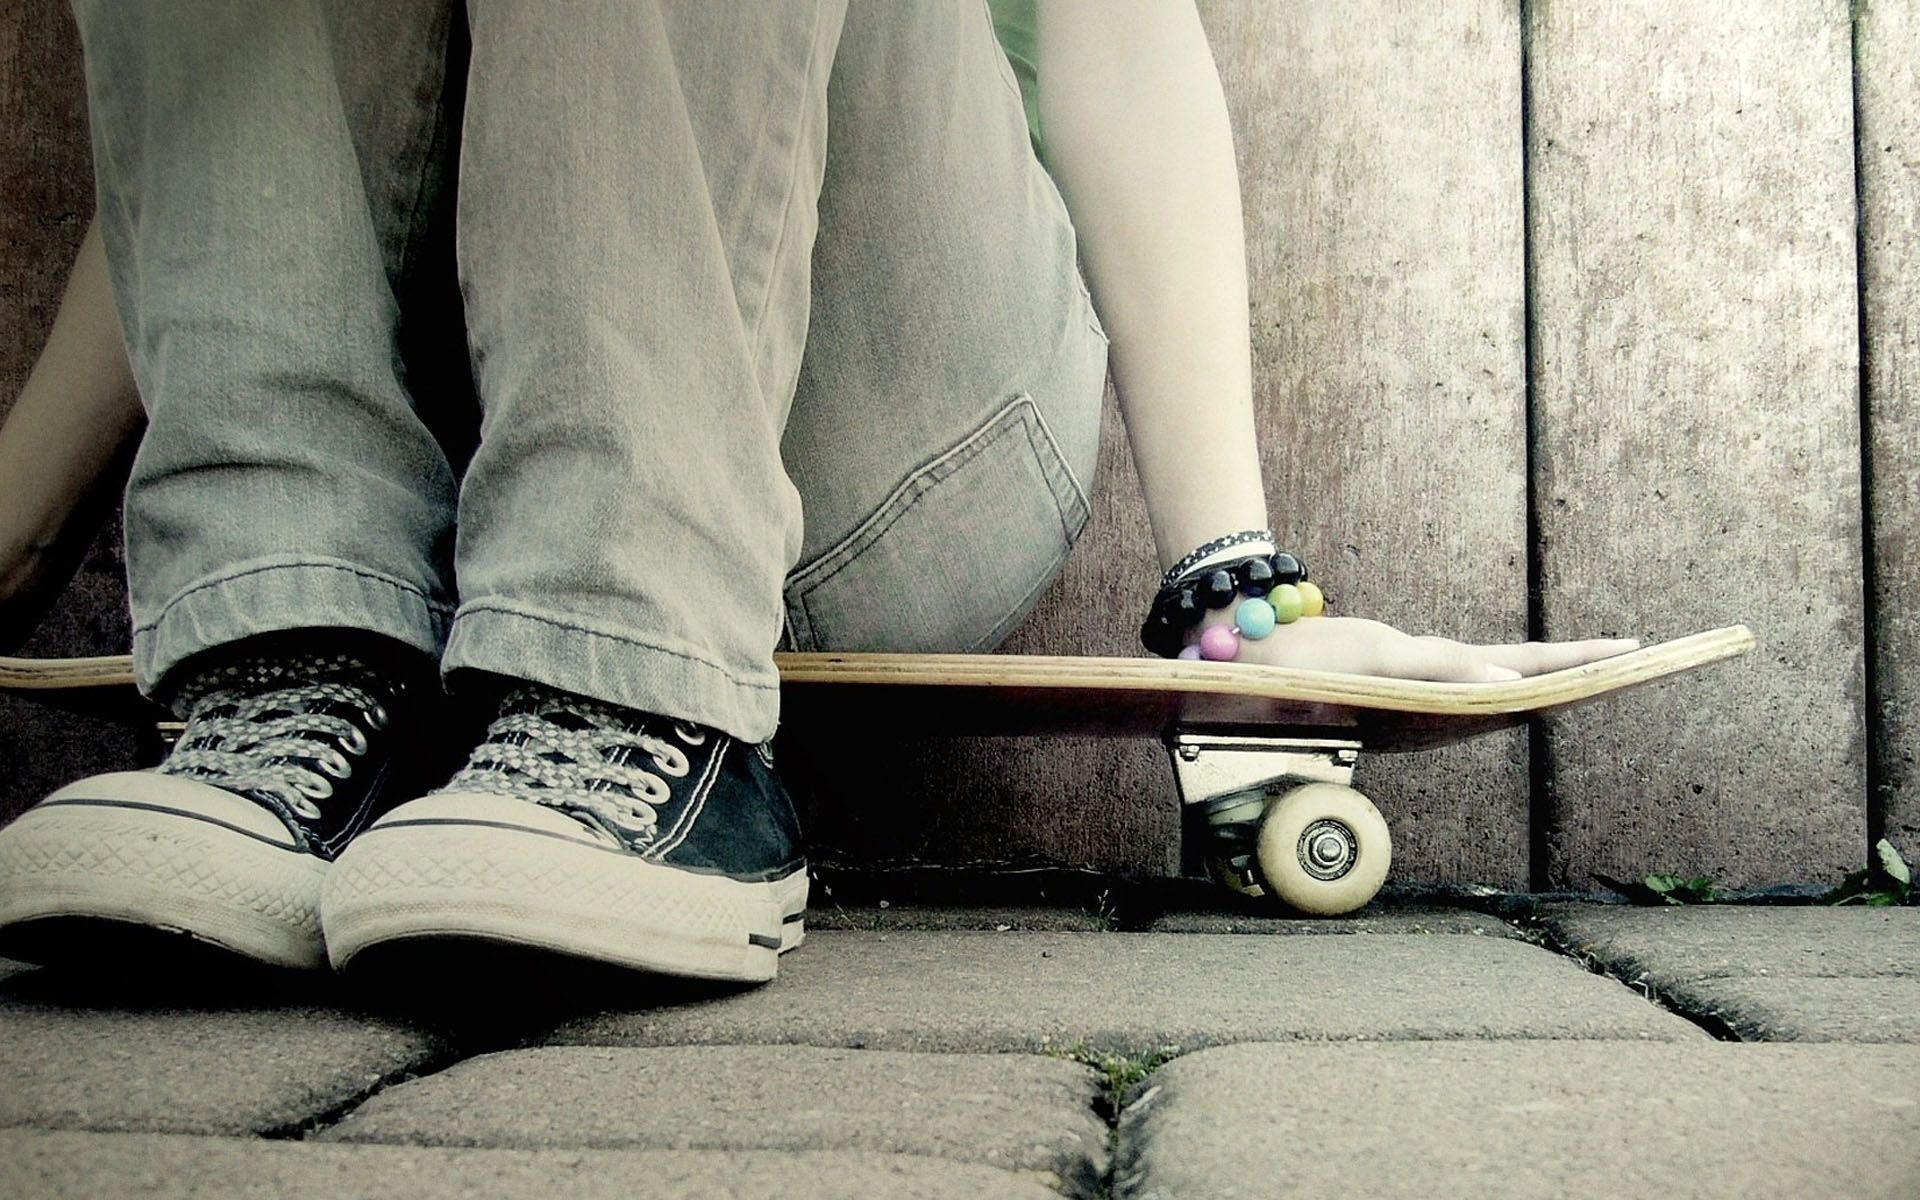 powell-skateboards-1920x1200.jpg